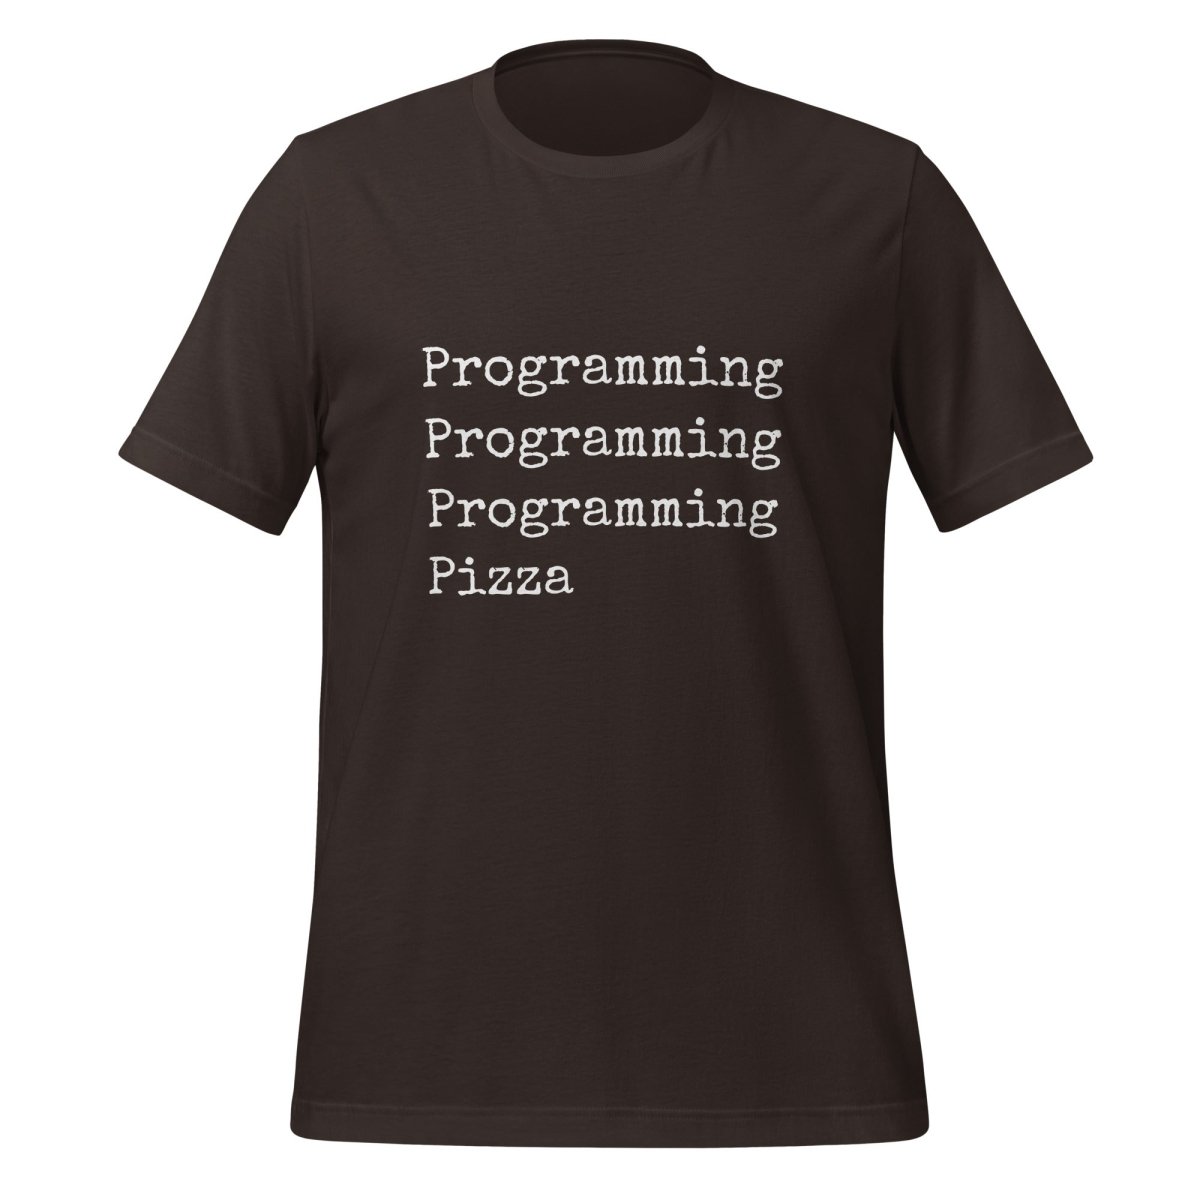 Programming & Pizza T - Shirt (unisex) - Brown - AI Store